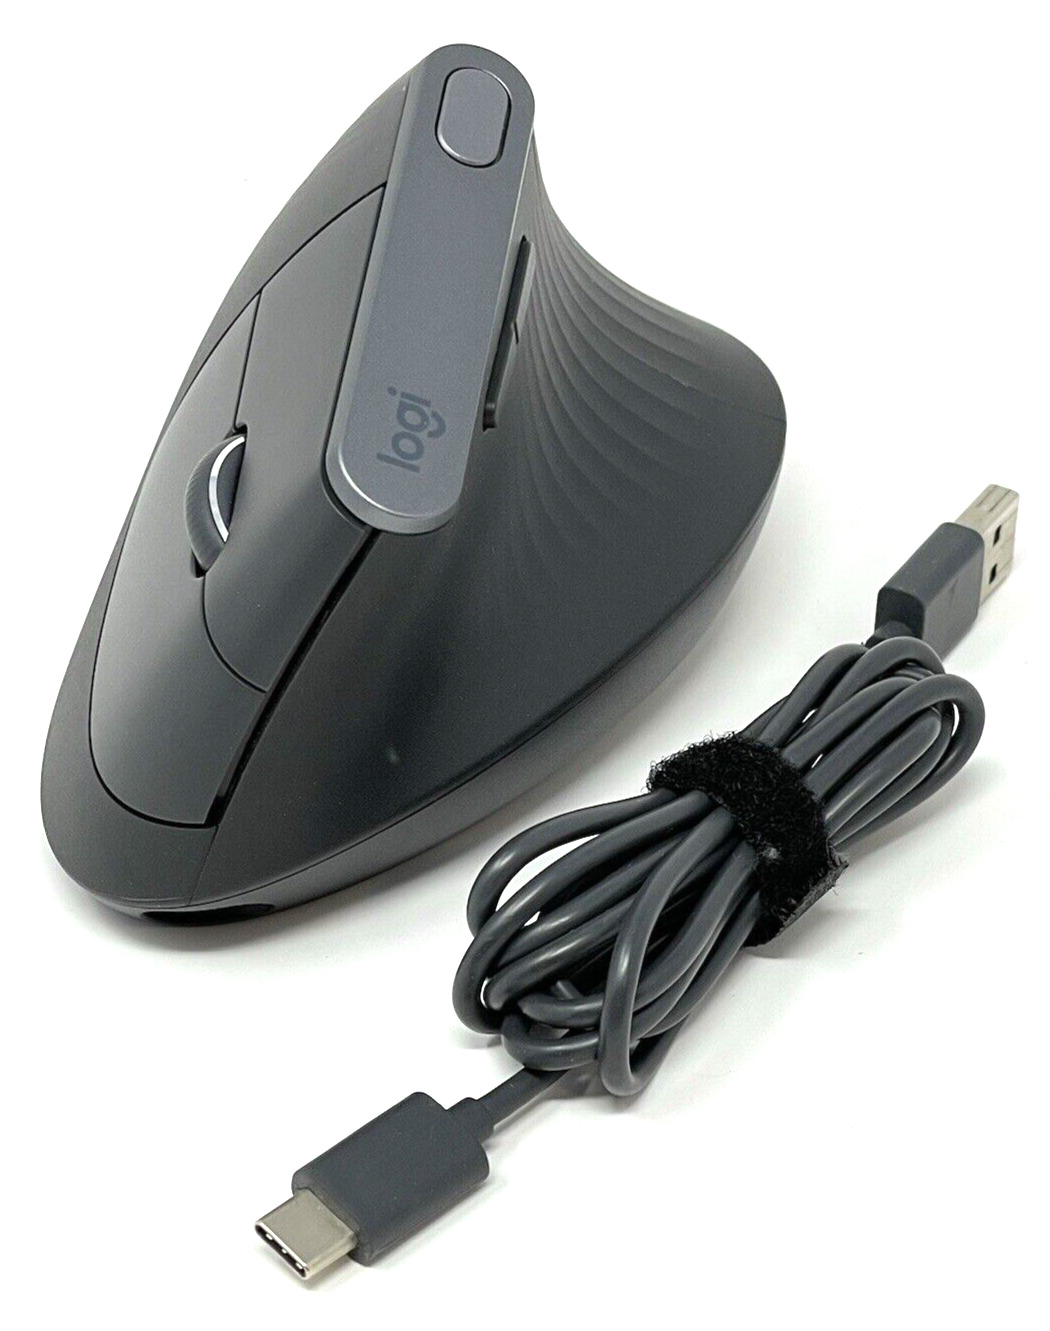 Logitech Logi MX Vertical Ergonomic Bluetooth Wireless Mouse w/o Dongle Tested